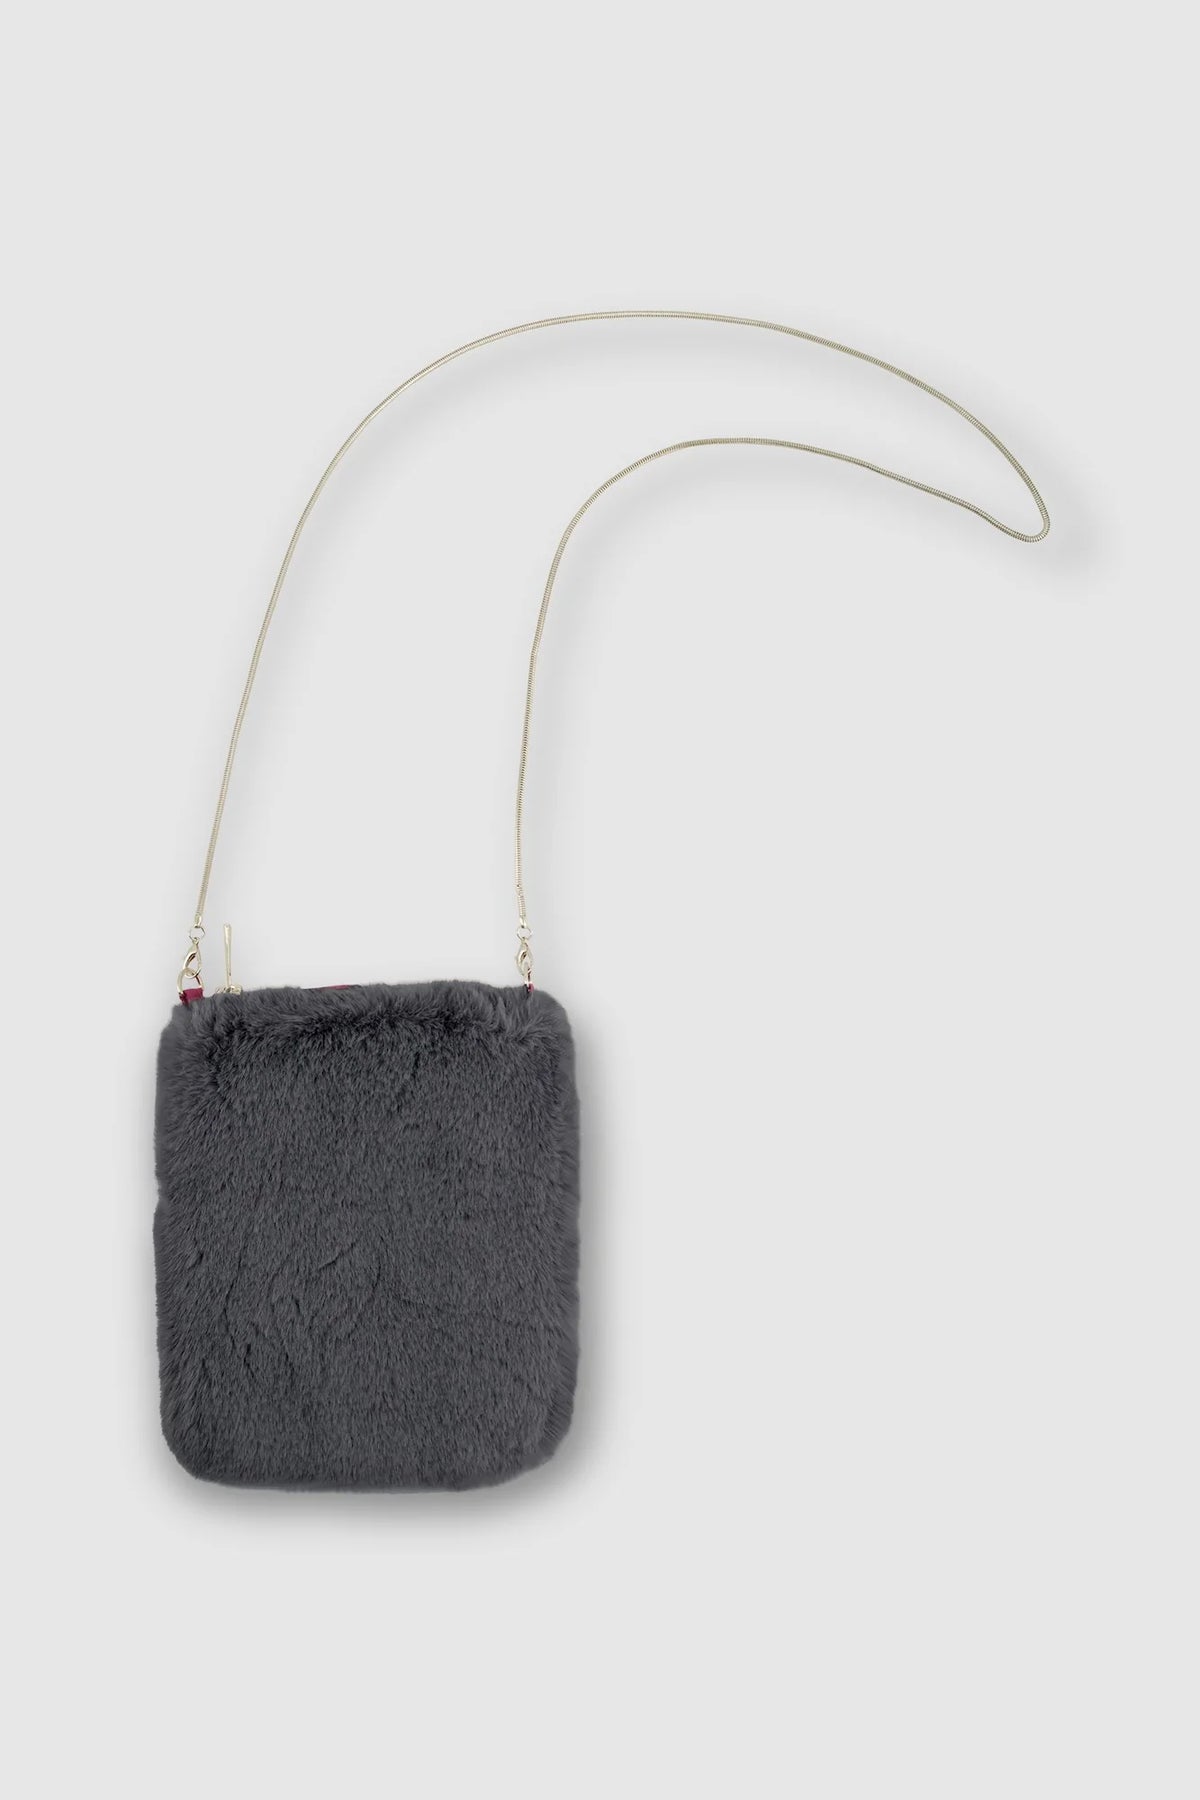 Small grey faux fur shoulder bag with silver metallic cord detachable strap